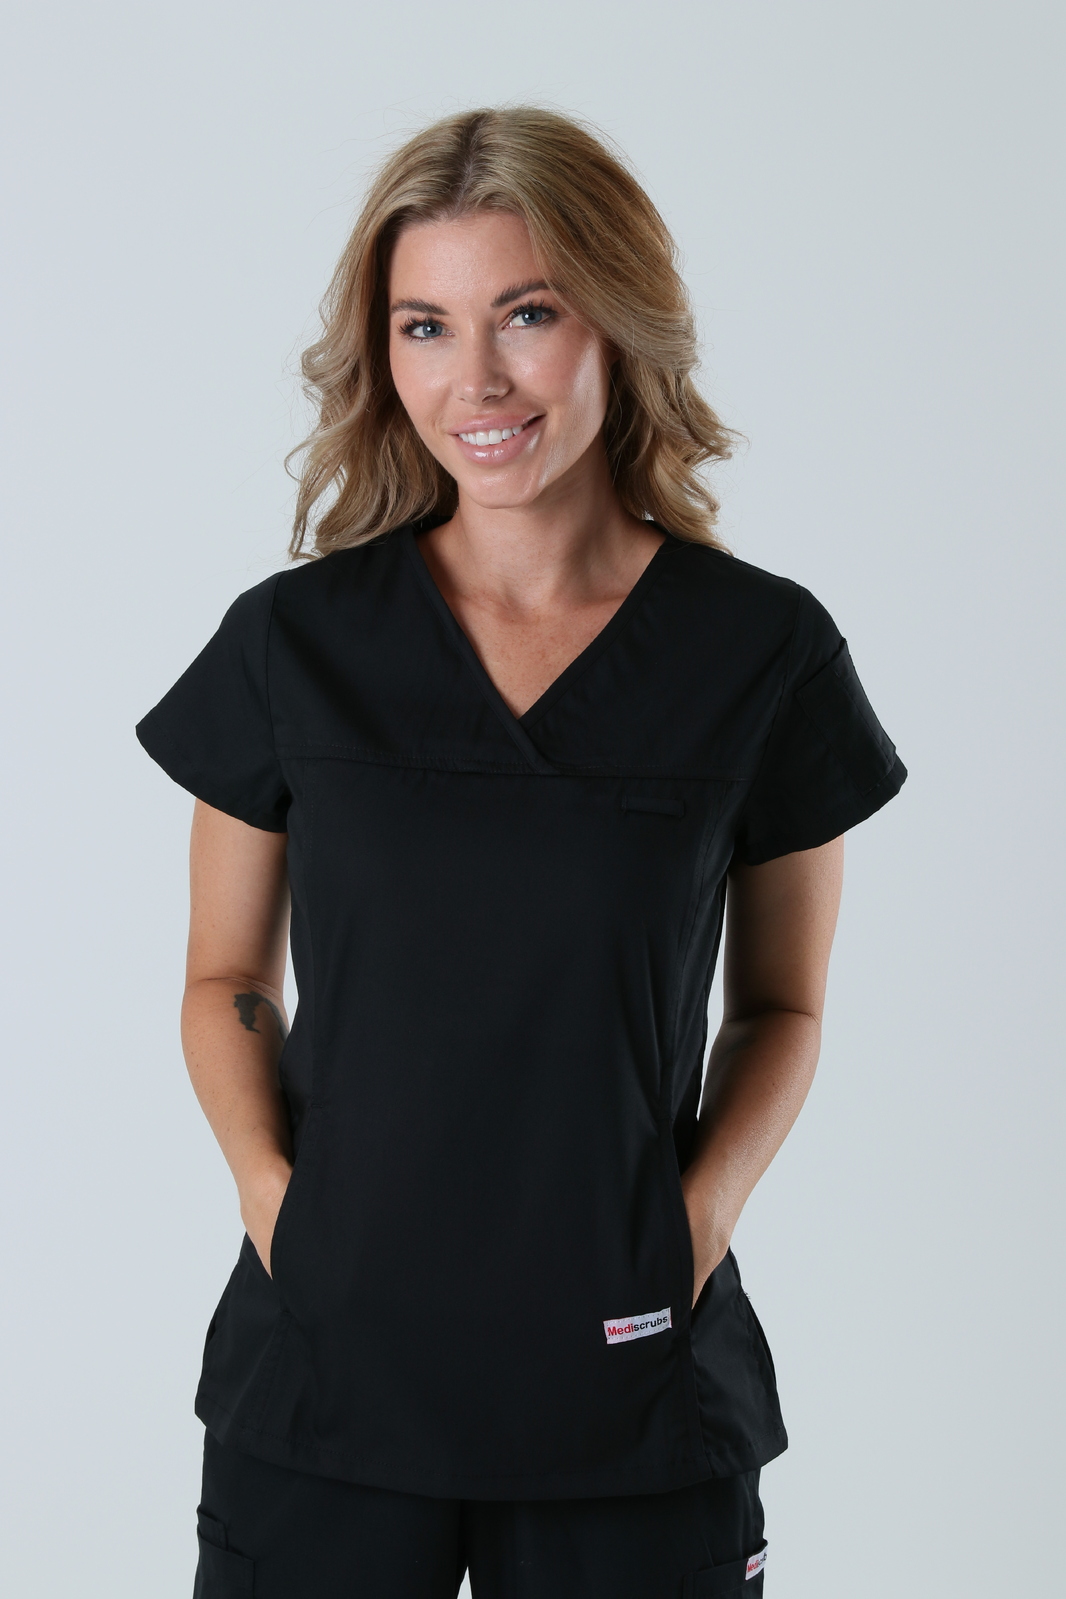 Redcliffe Hospital - Medical/Stroke Ward (Women's Fit Solid Scrub Top in Black incl Logos)